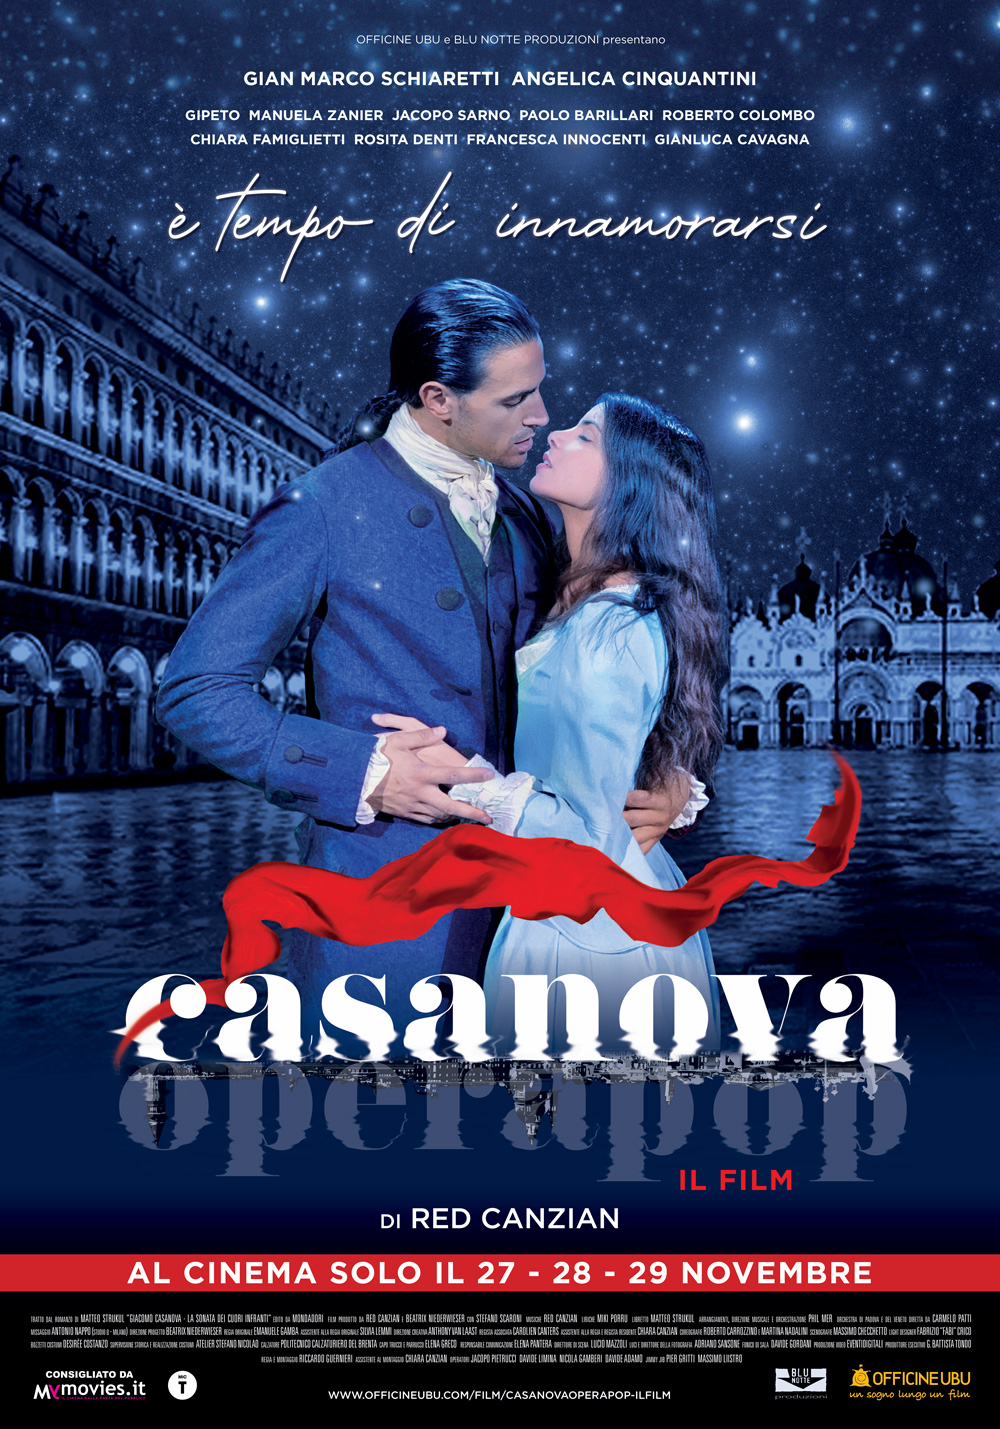 Casanova Operapop - il film, di Red Canzian